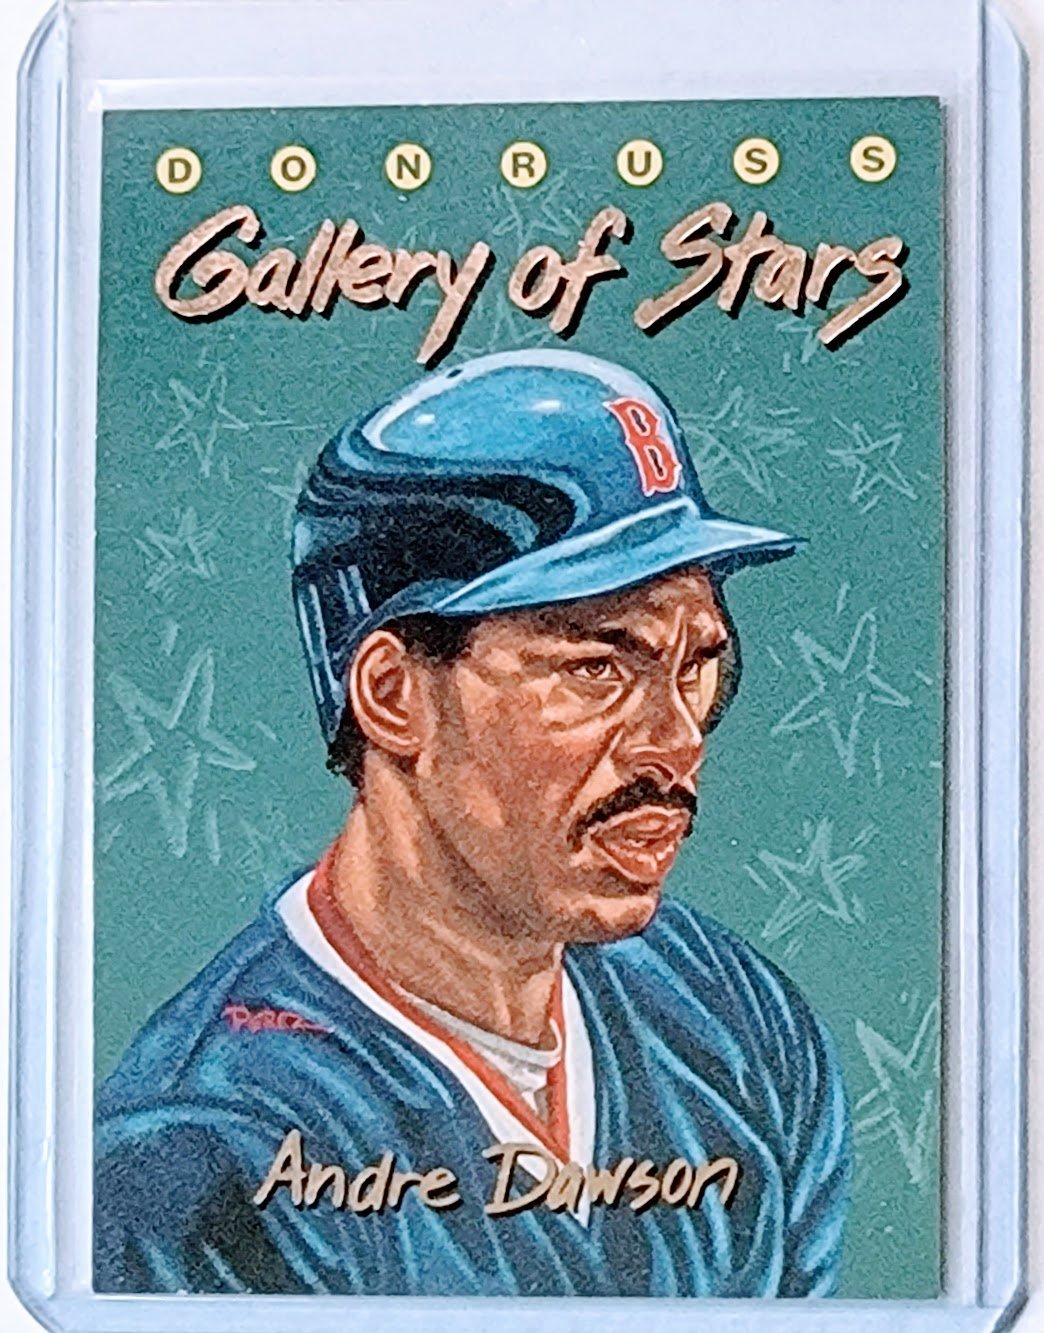 1993 Donruss Gallery of Stars Andre Dawson Baseball Trading Card TPTV